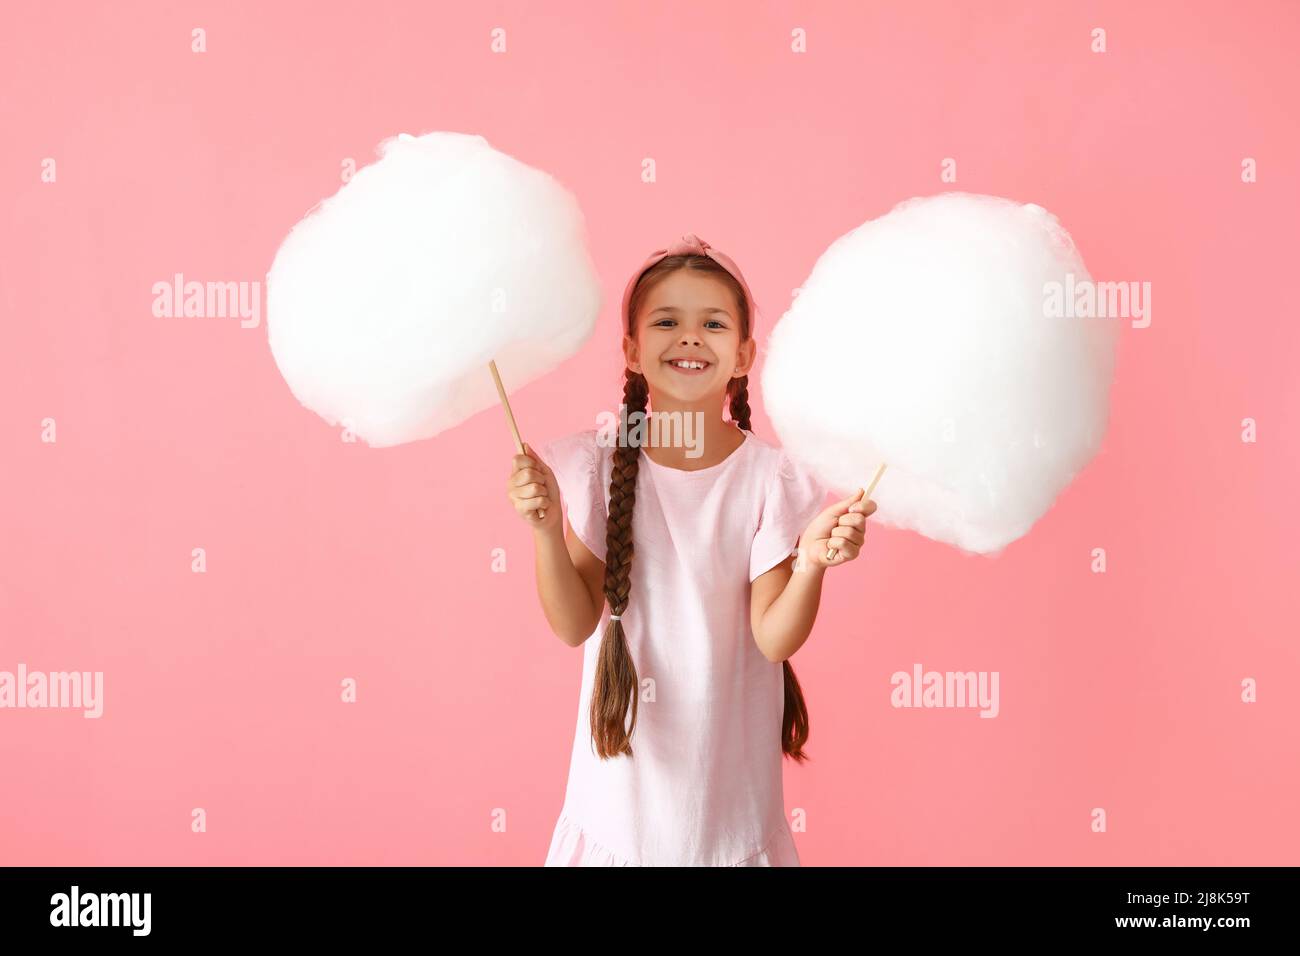 Algodón dulce, rosa, aislado sobre fondo blanco Fotografía de stock - Alamy